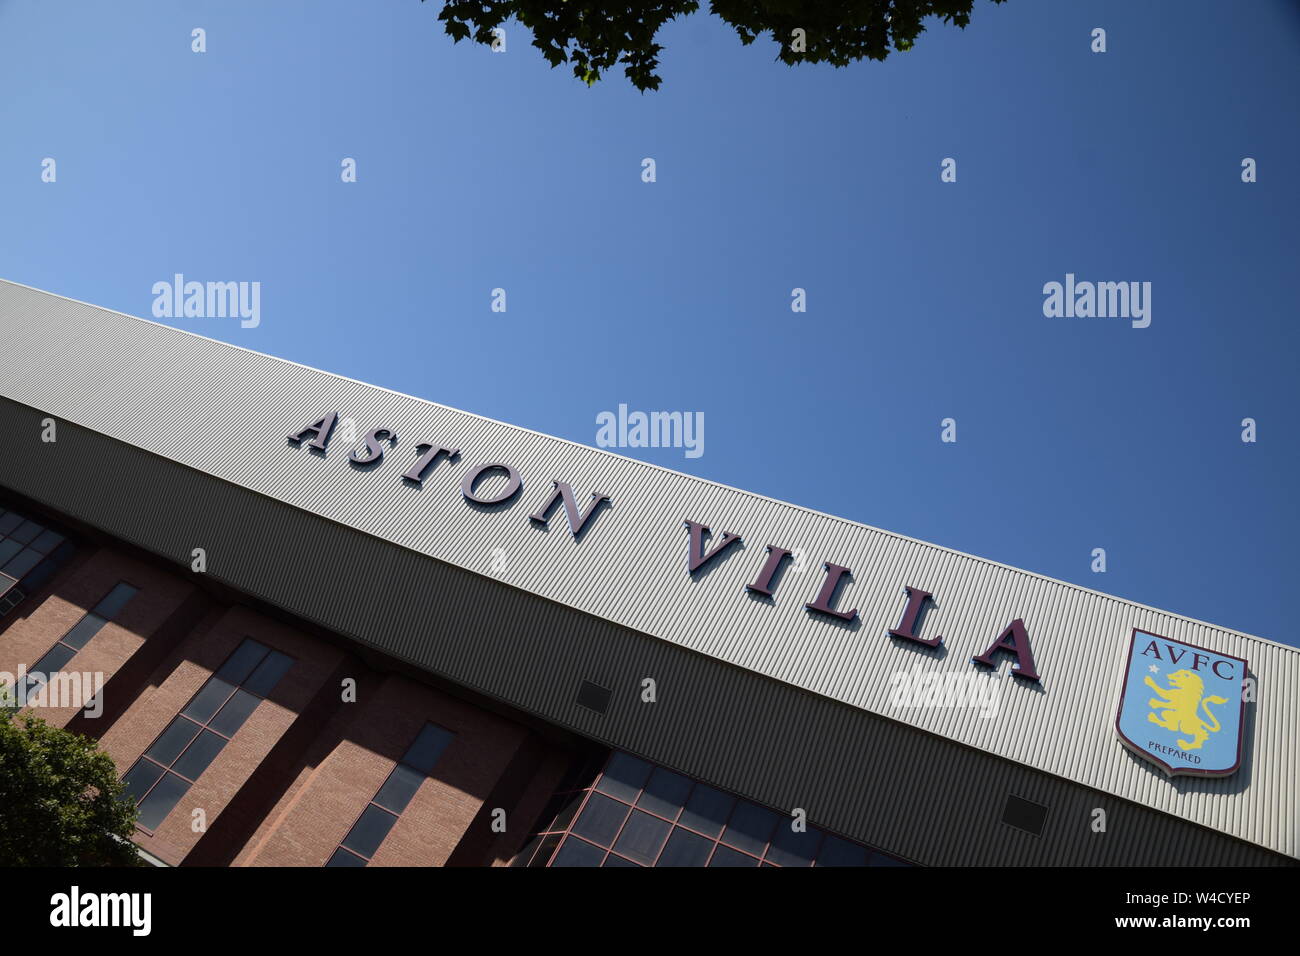 Aston Villa Stadium Badge Birmingham England UK Stock Photo